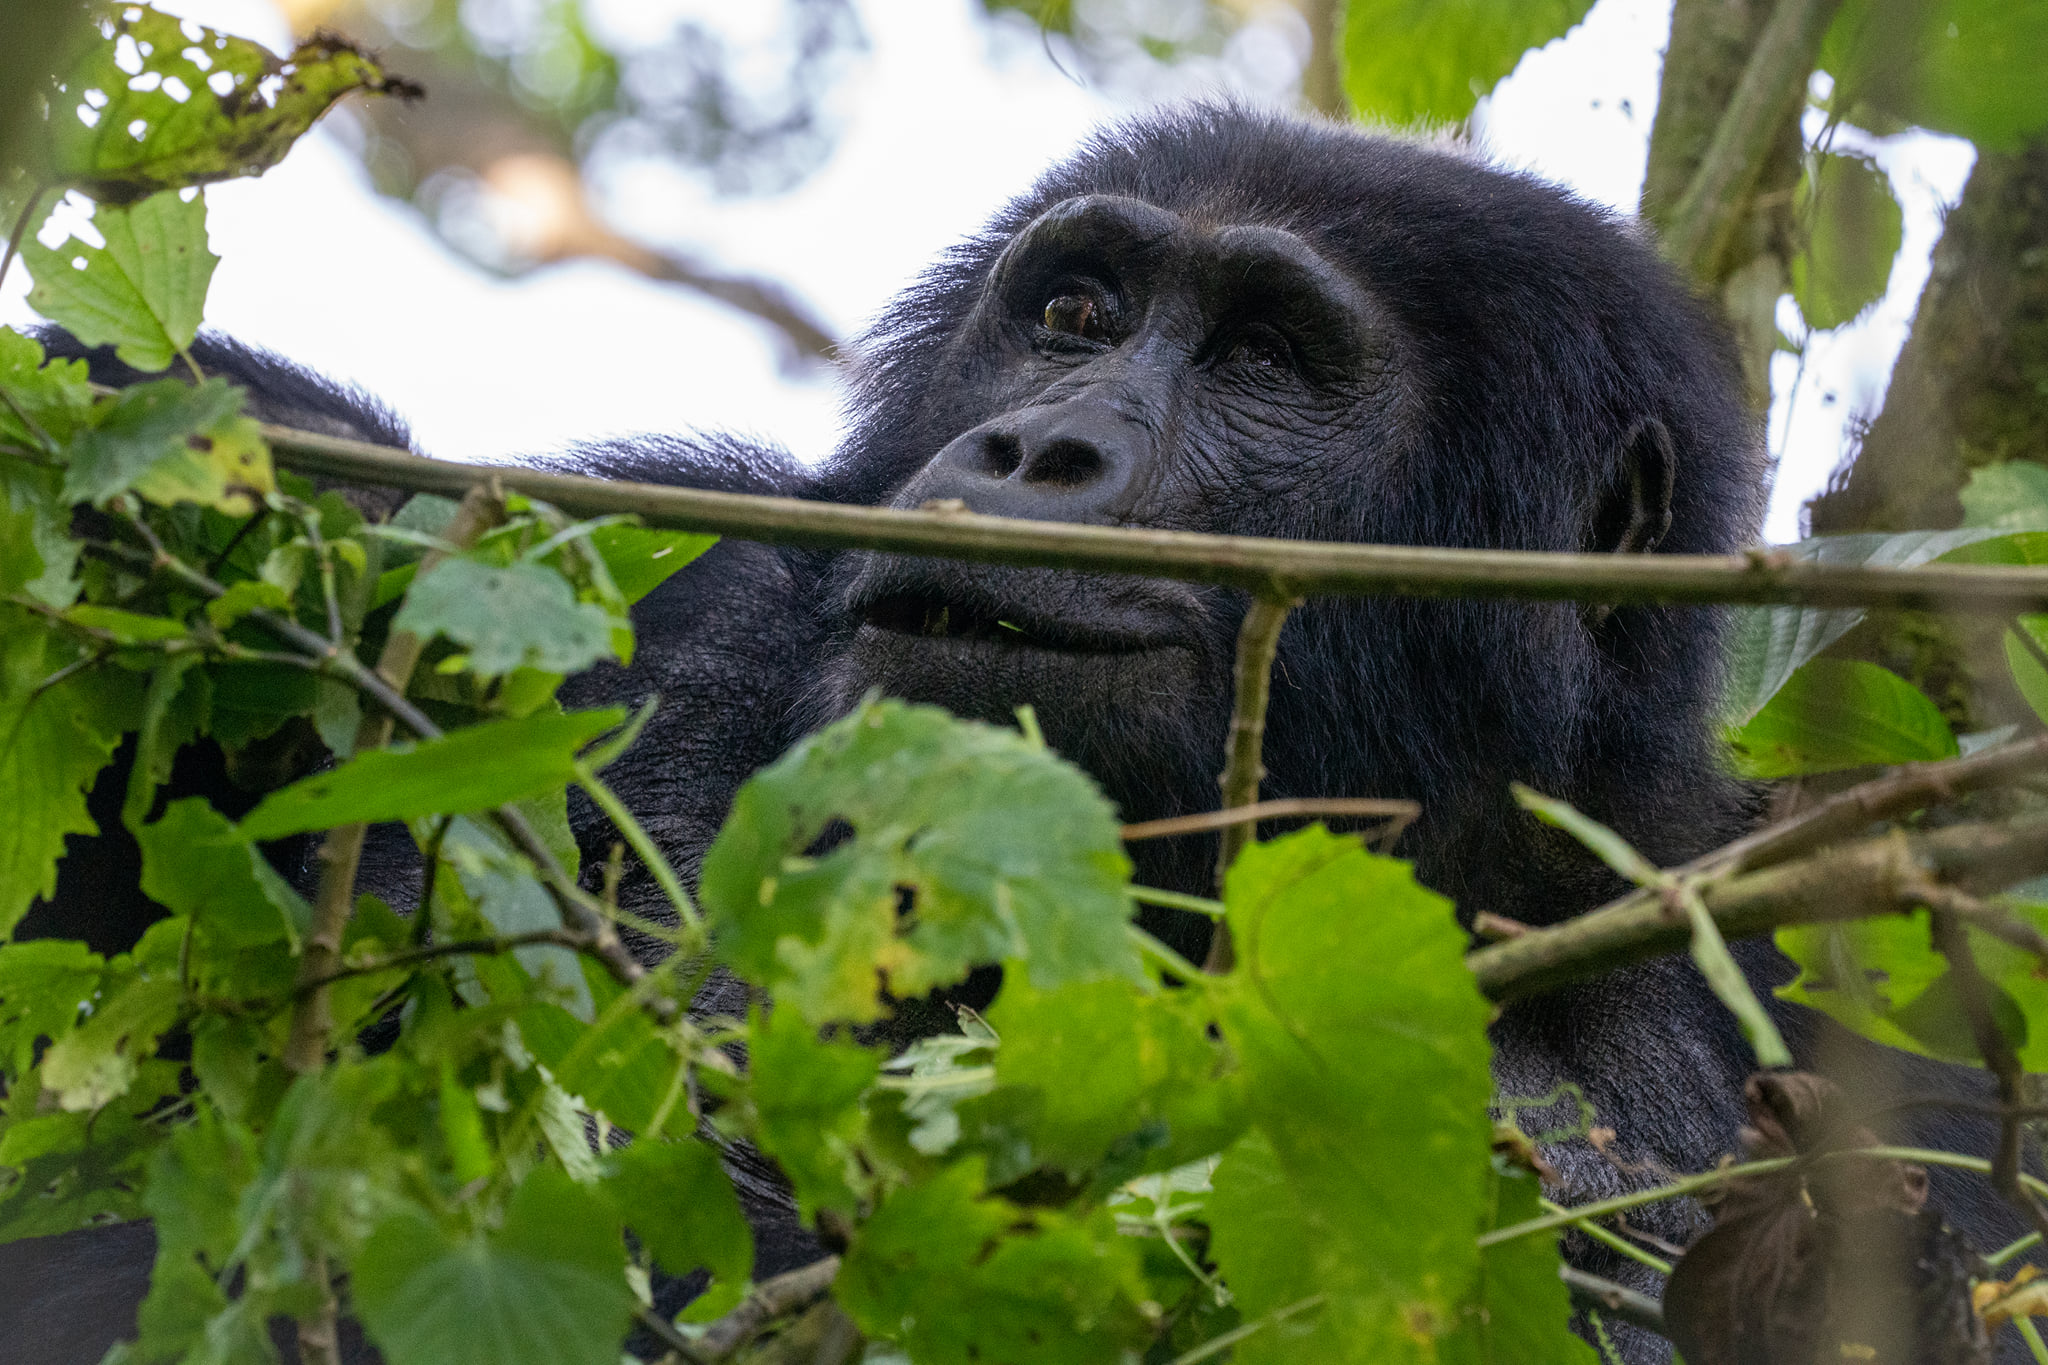 A guide to see mountain gorillas in Rwanda